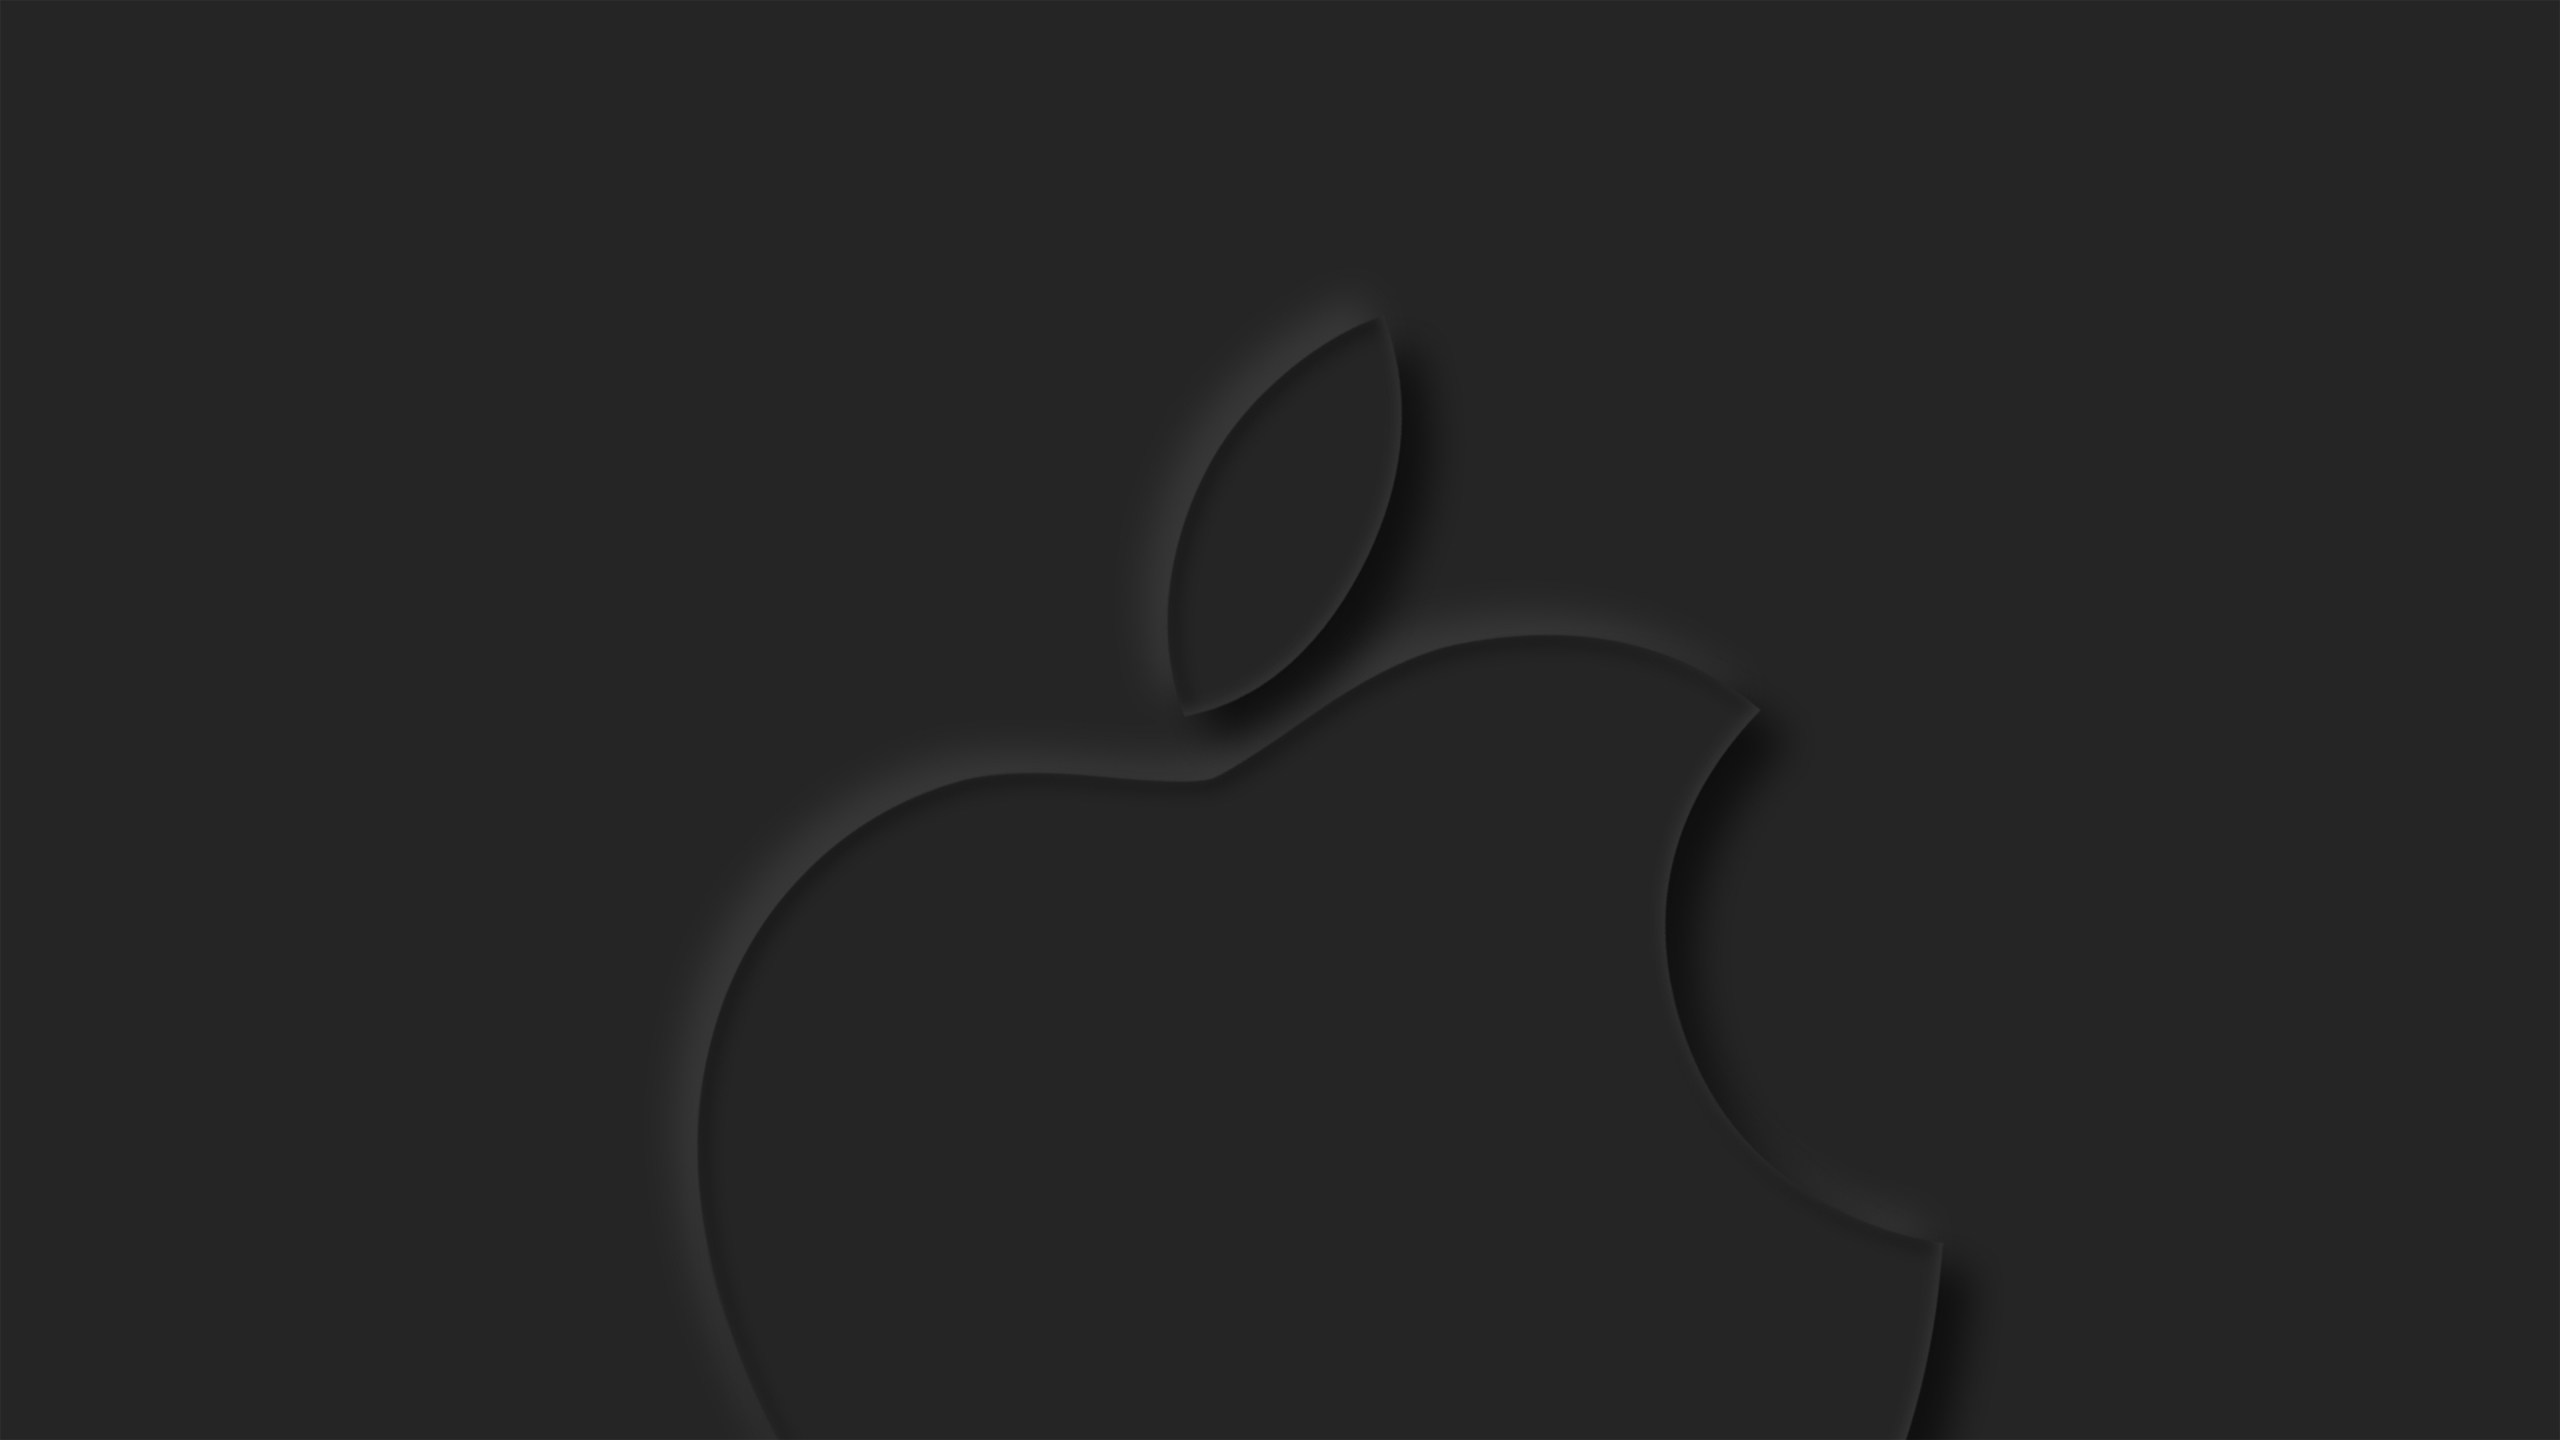 Download wallpaper 2560x1440 apple logo, dark-grey surface, dual wide ...